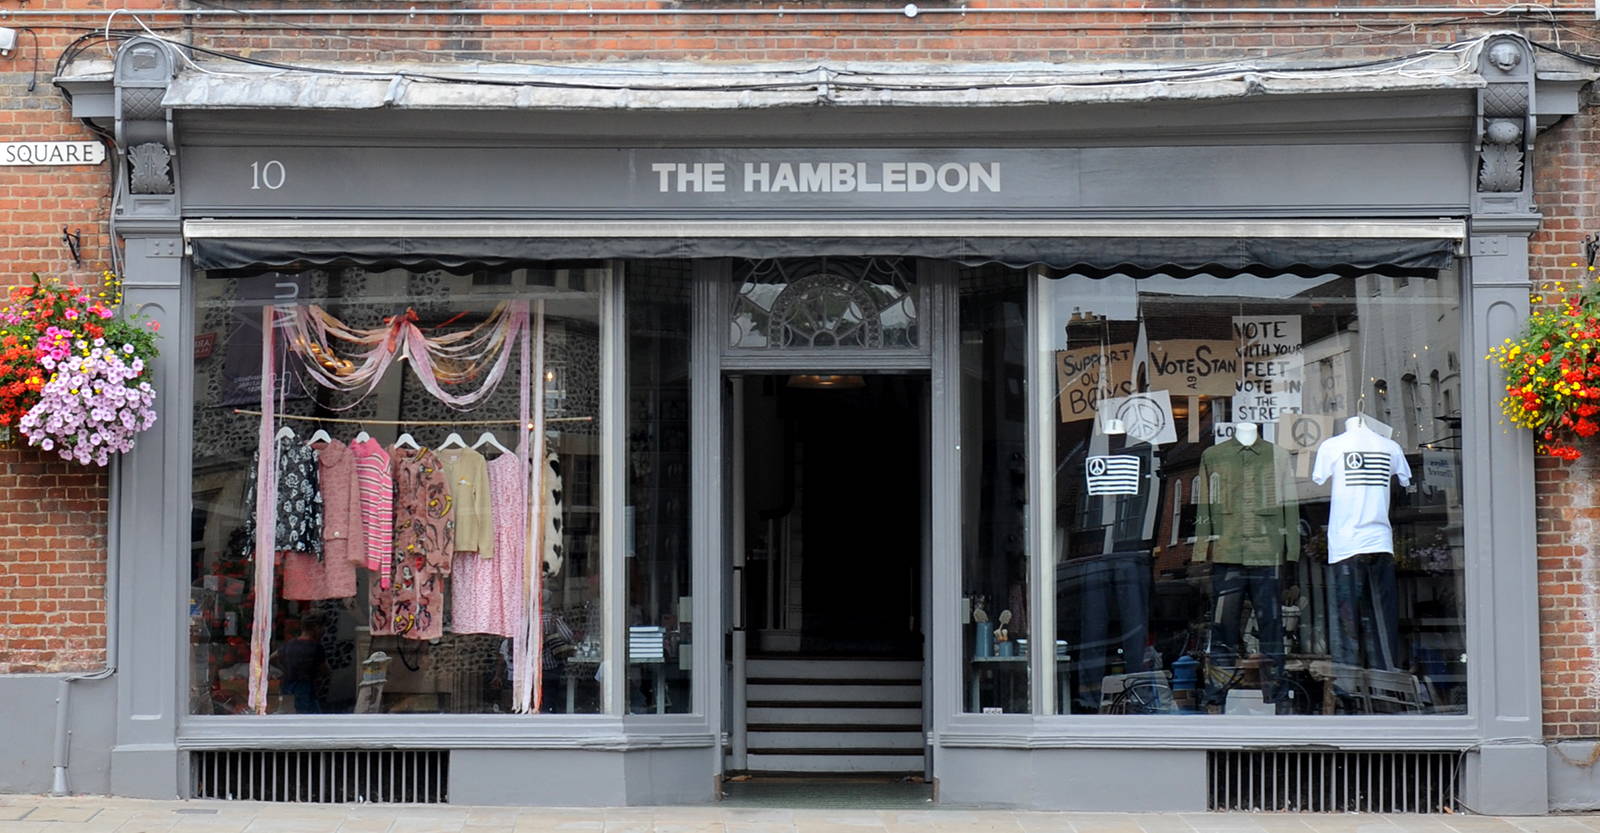 The Hambledon shop front